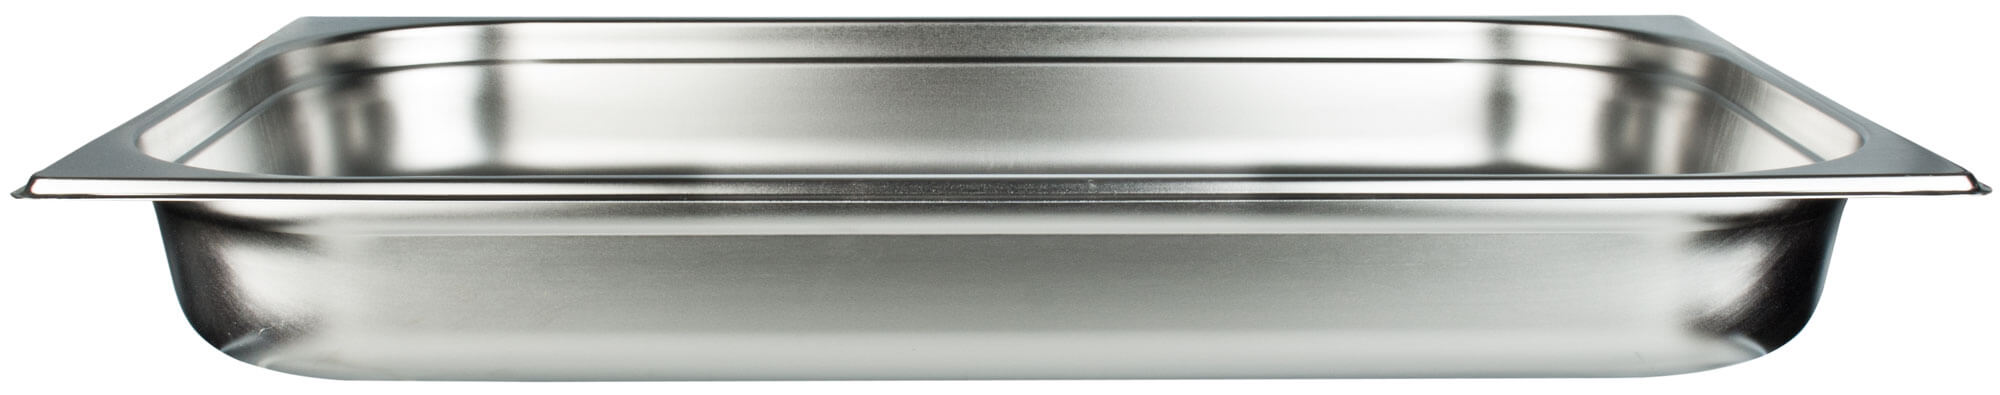 Gastronormbehälter 65mm Tiefe - Edelstahl (GN 1/1)